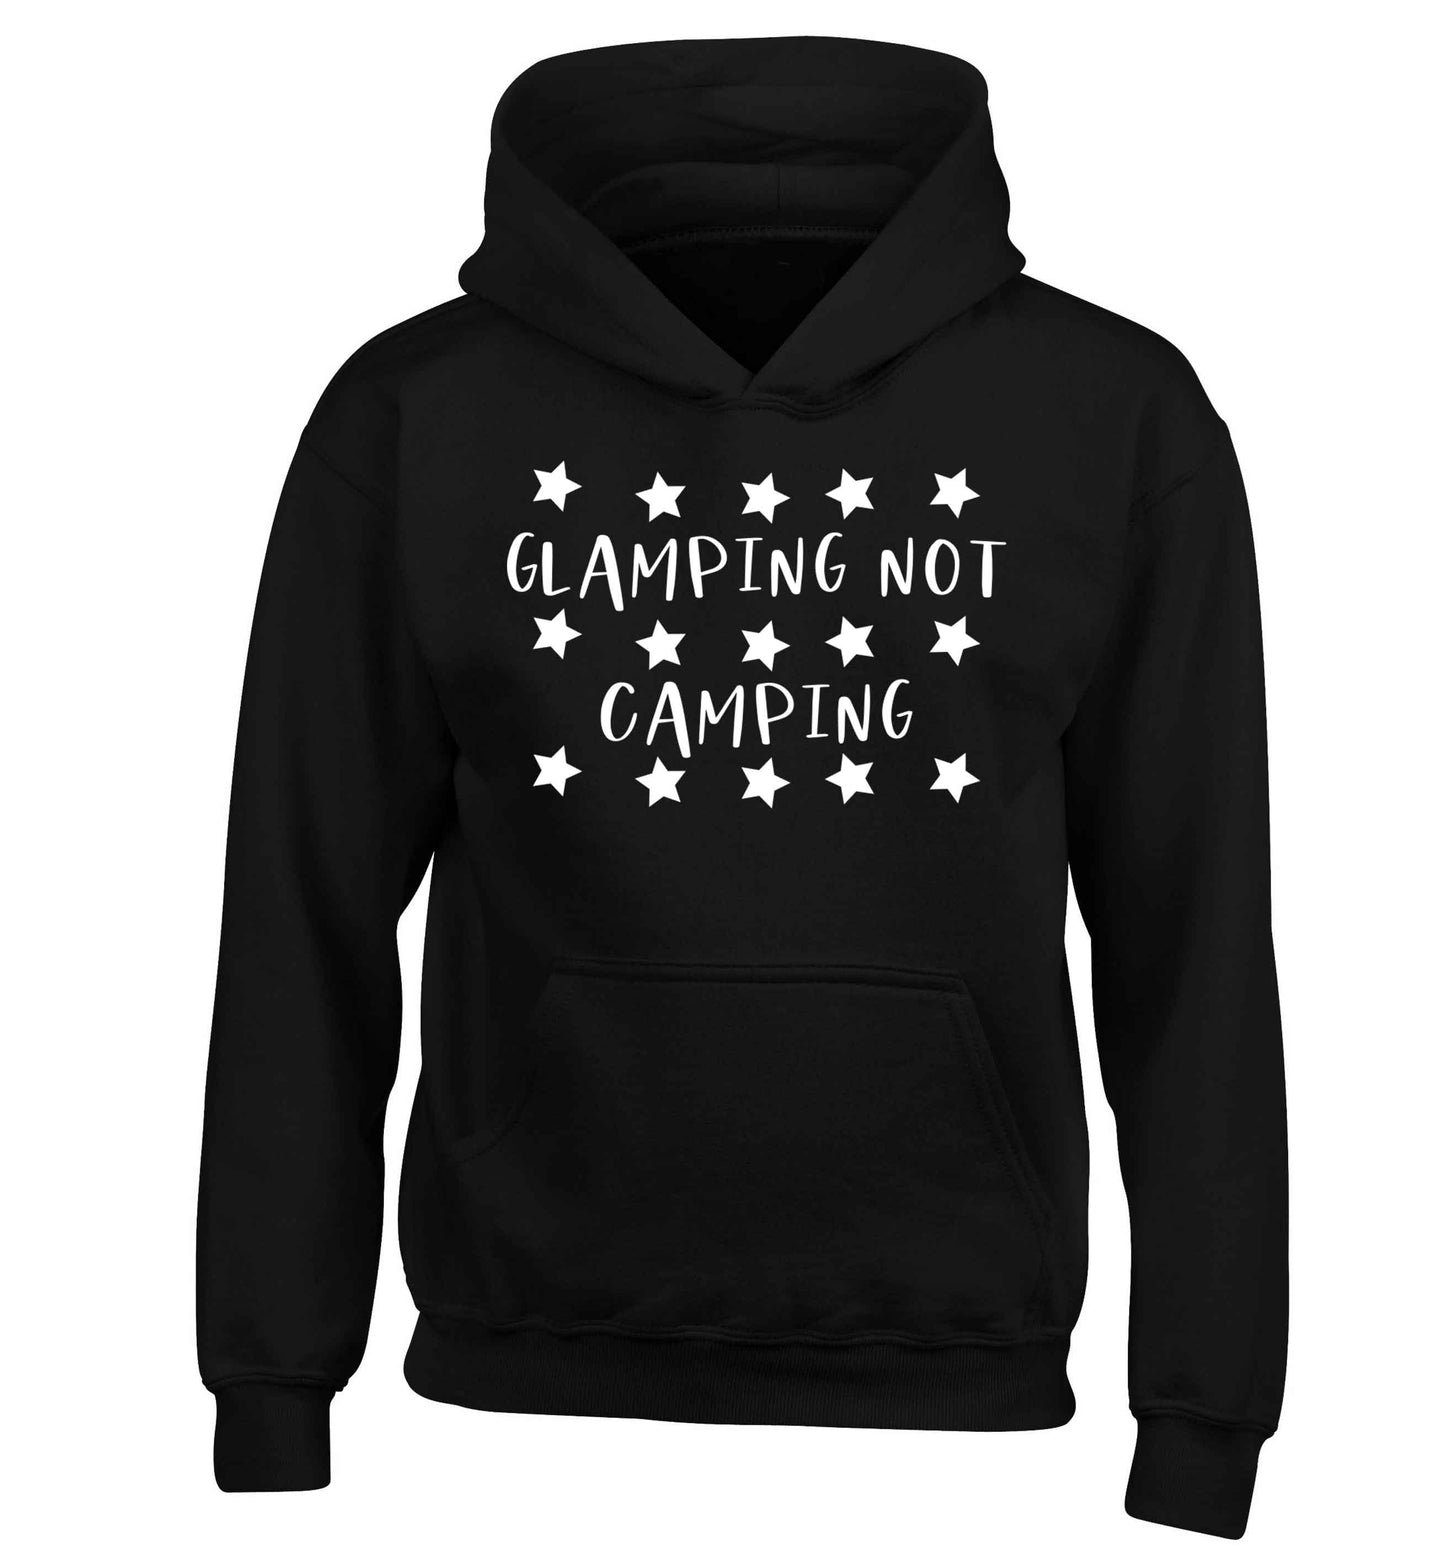 Glamping not camping children's black hoodie 12-13 Years